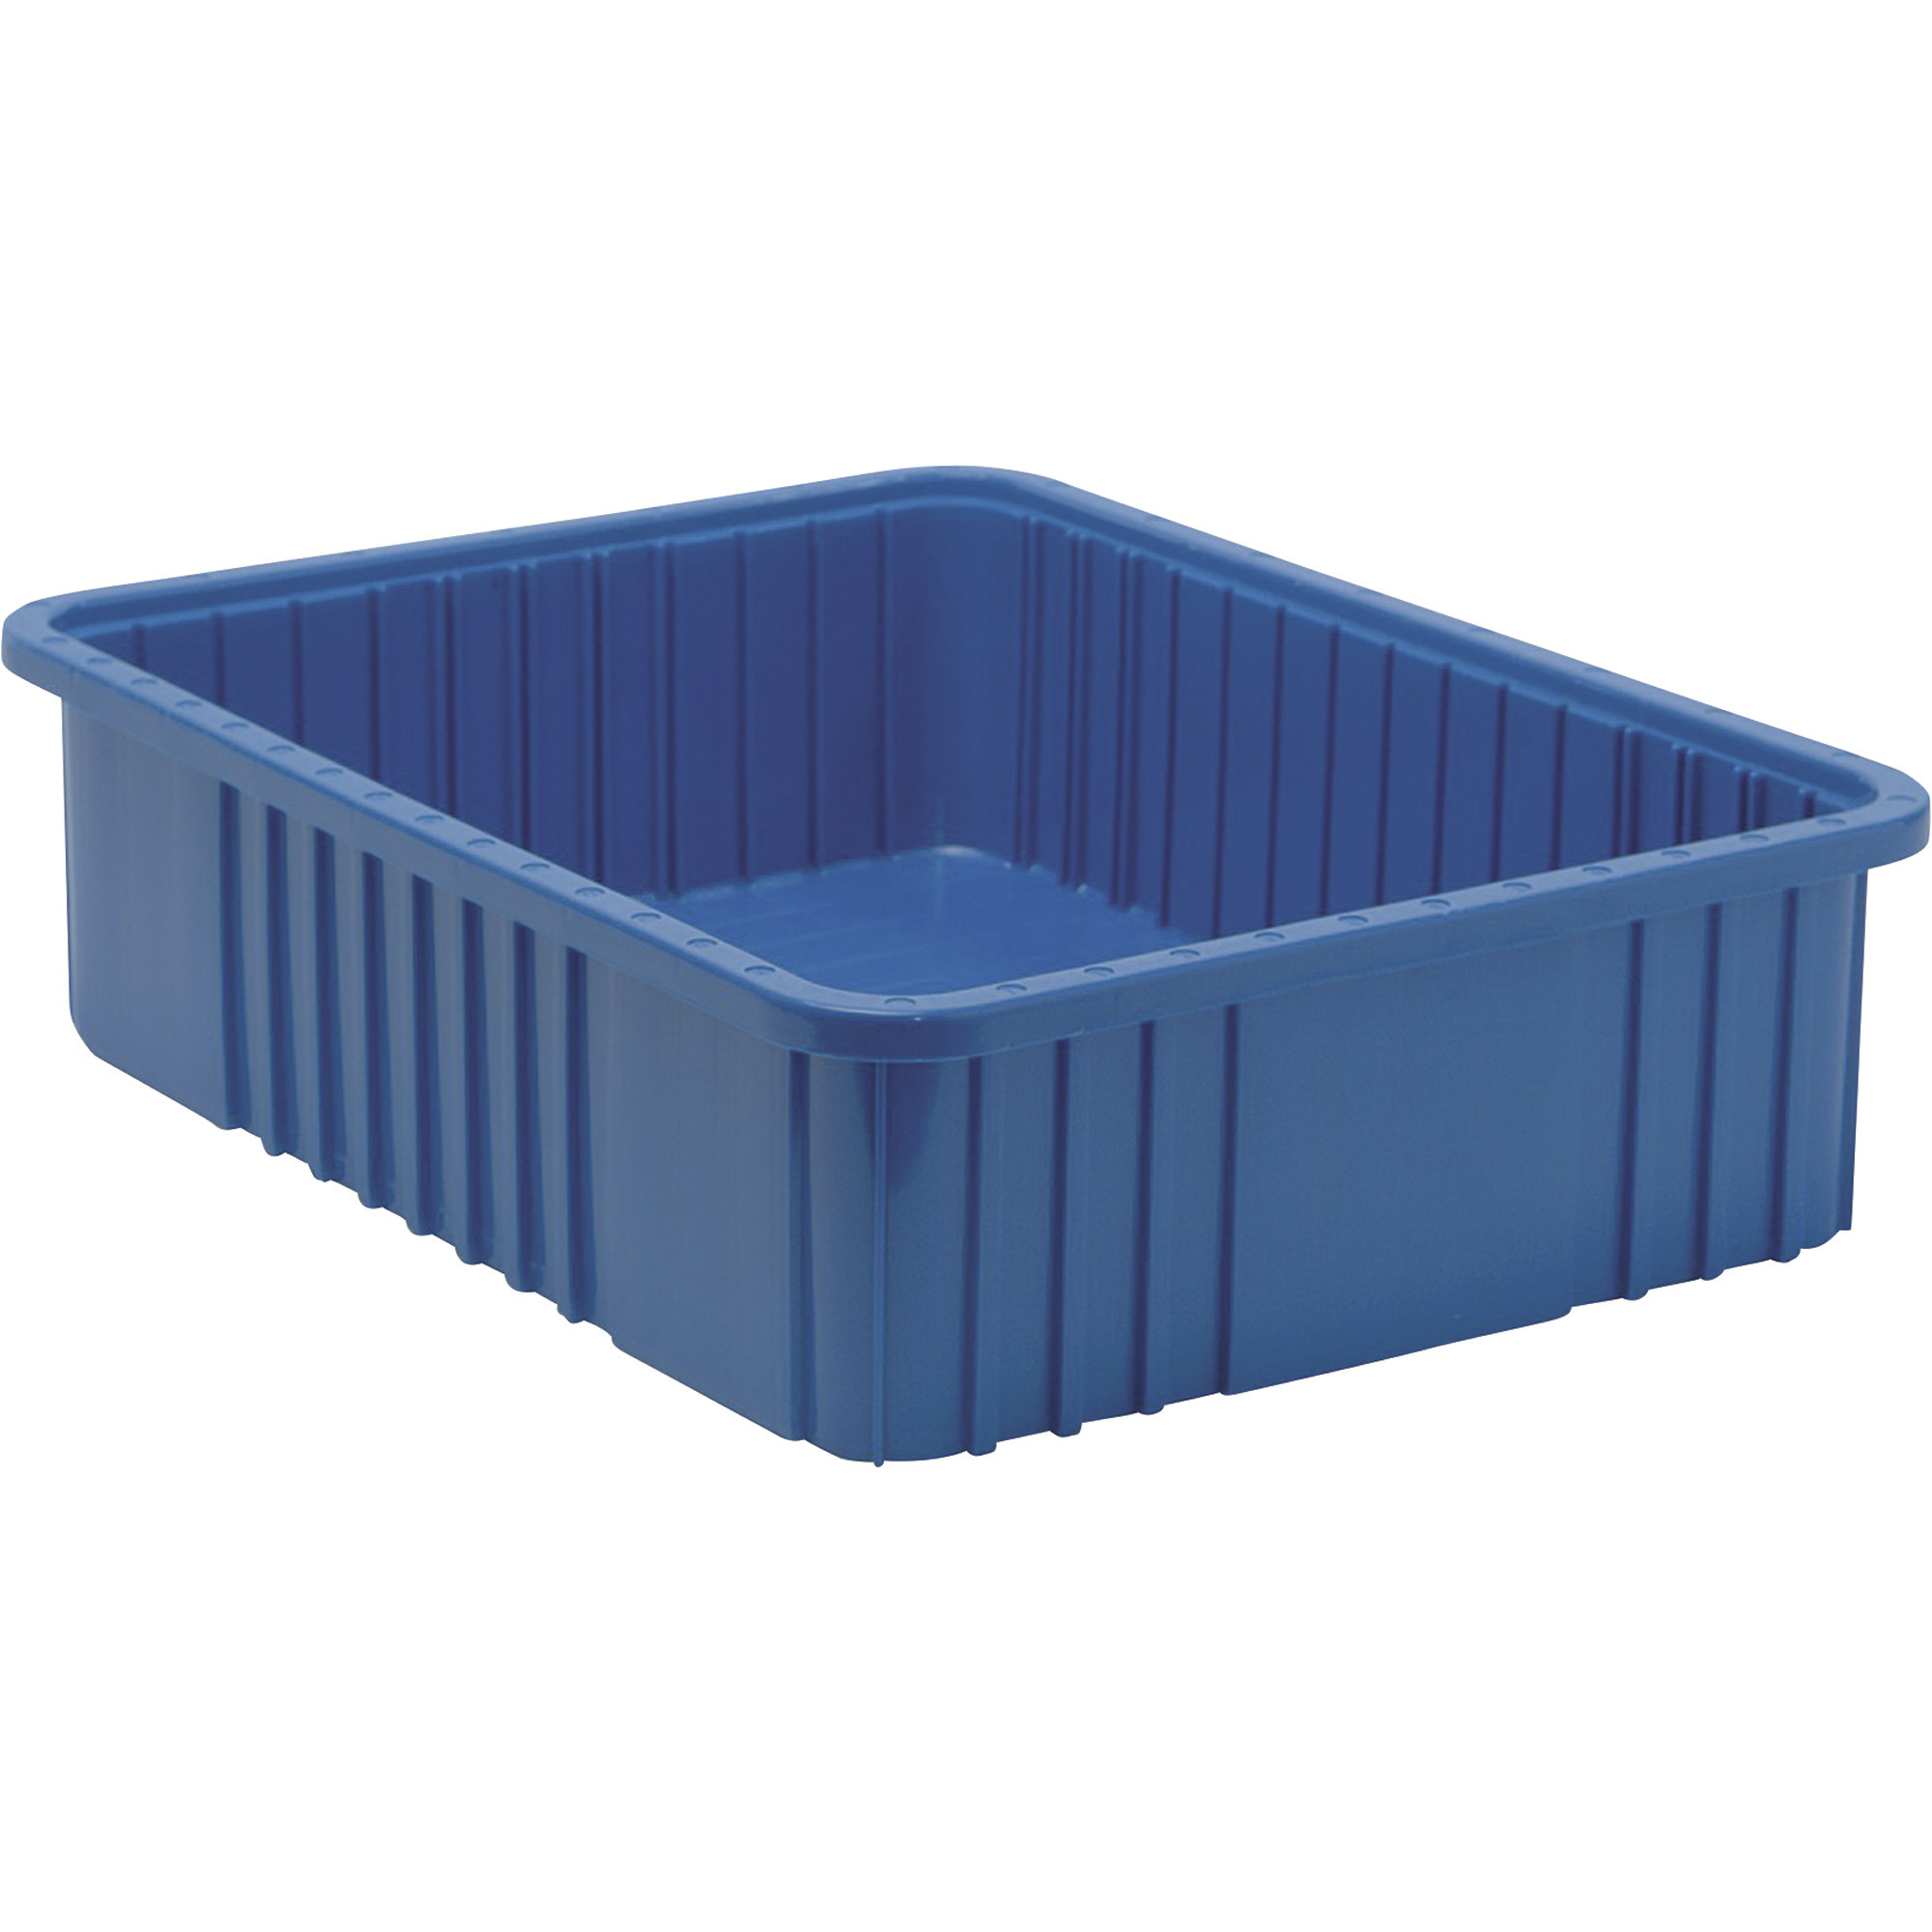 Quantum Storage Dividable Grid Container, 3-Pack, 22 1/2Inch L x 17 1/2Inch W x 6Inch H, Blue, Model DG93060BL